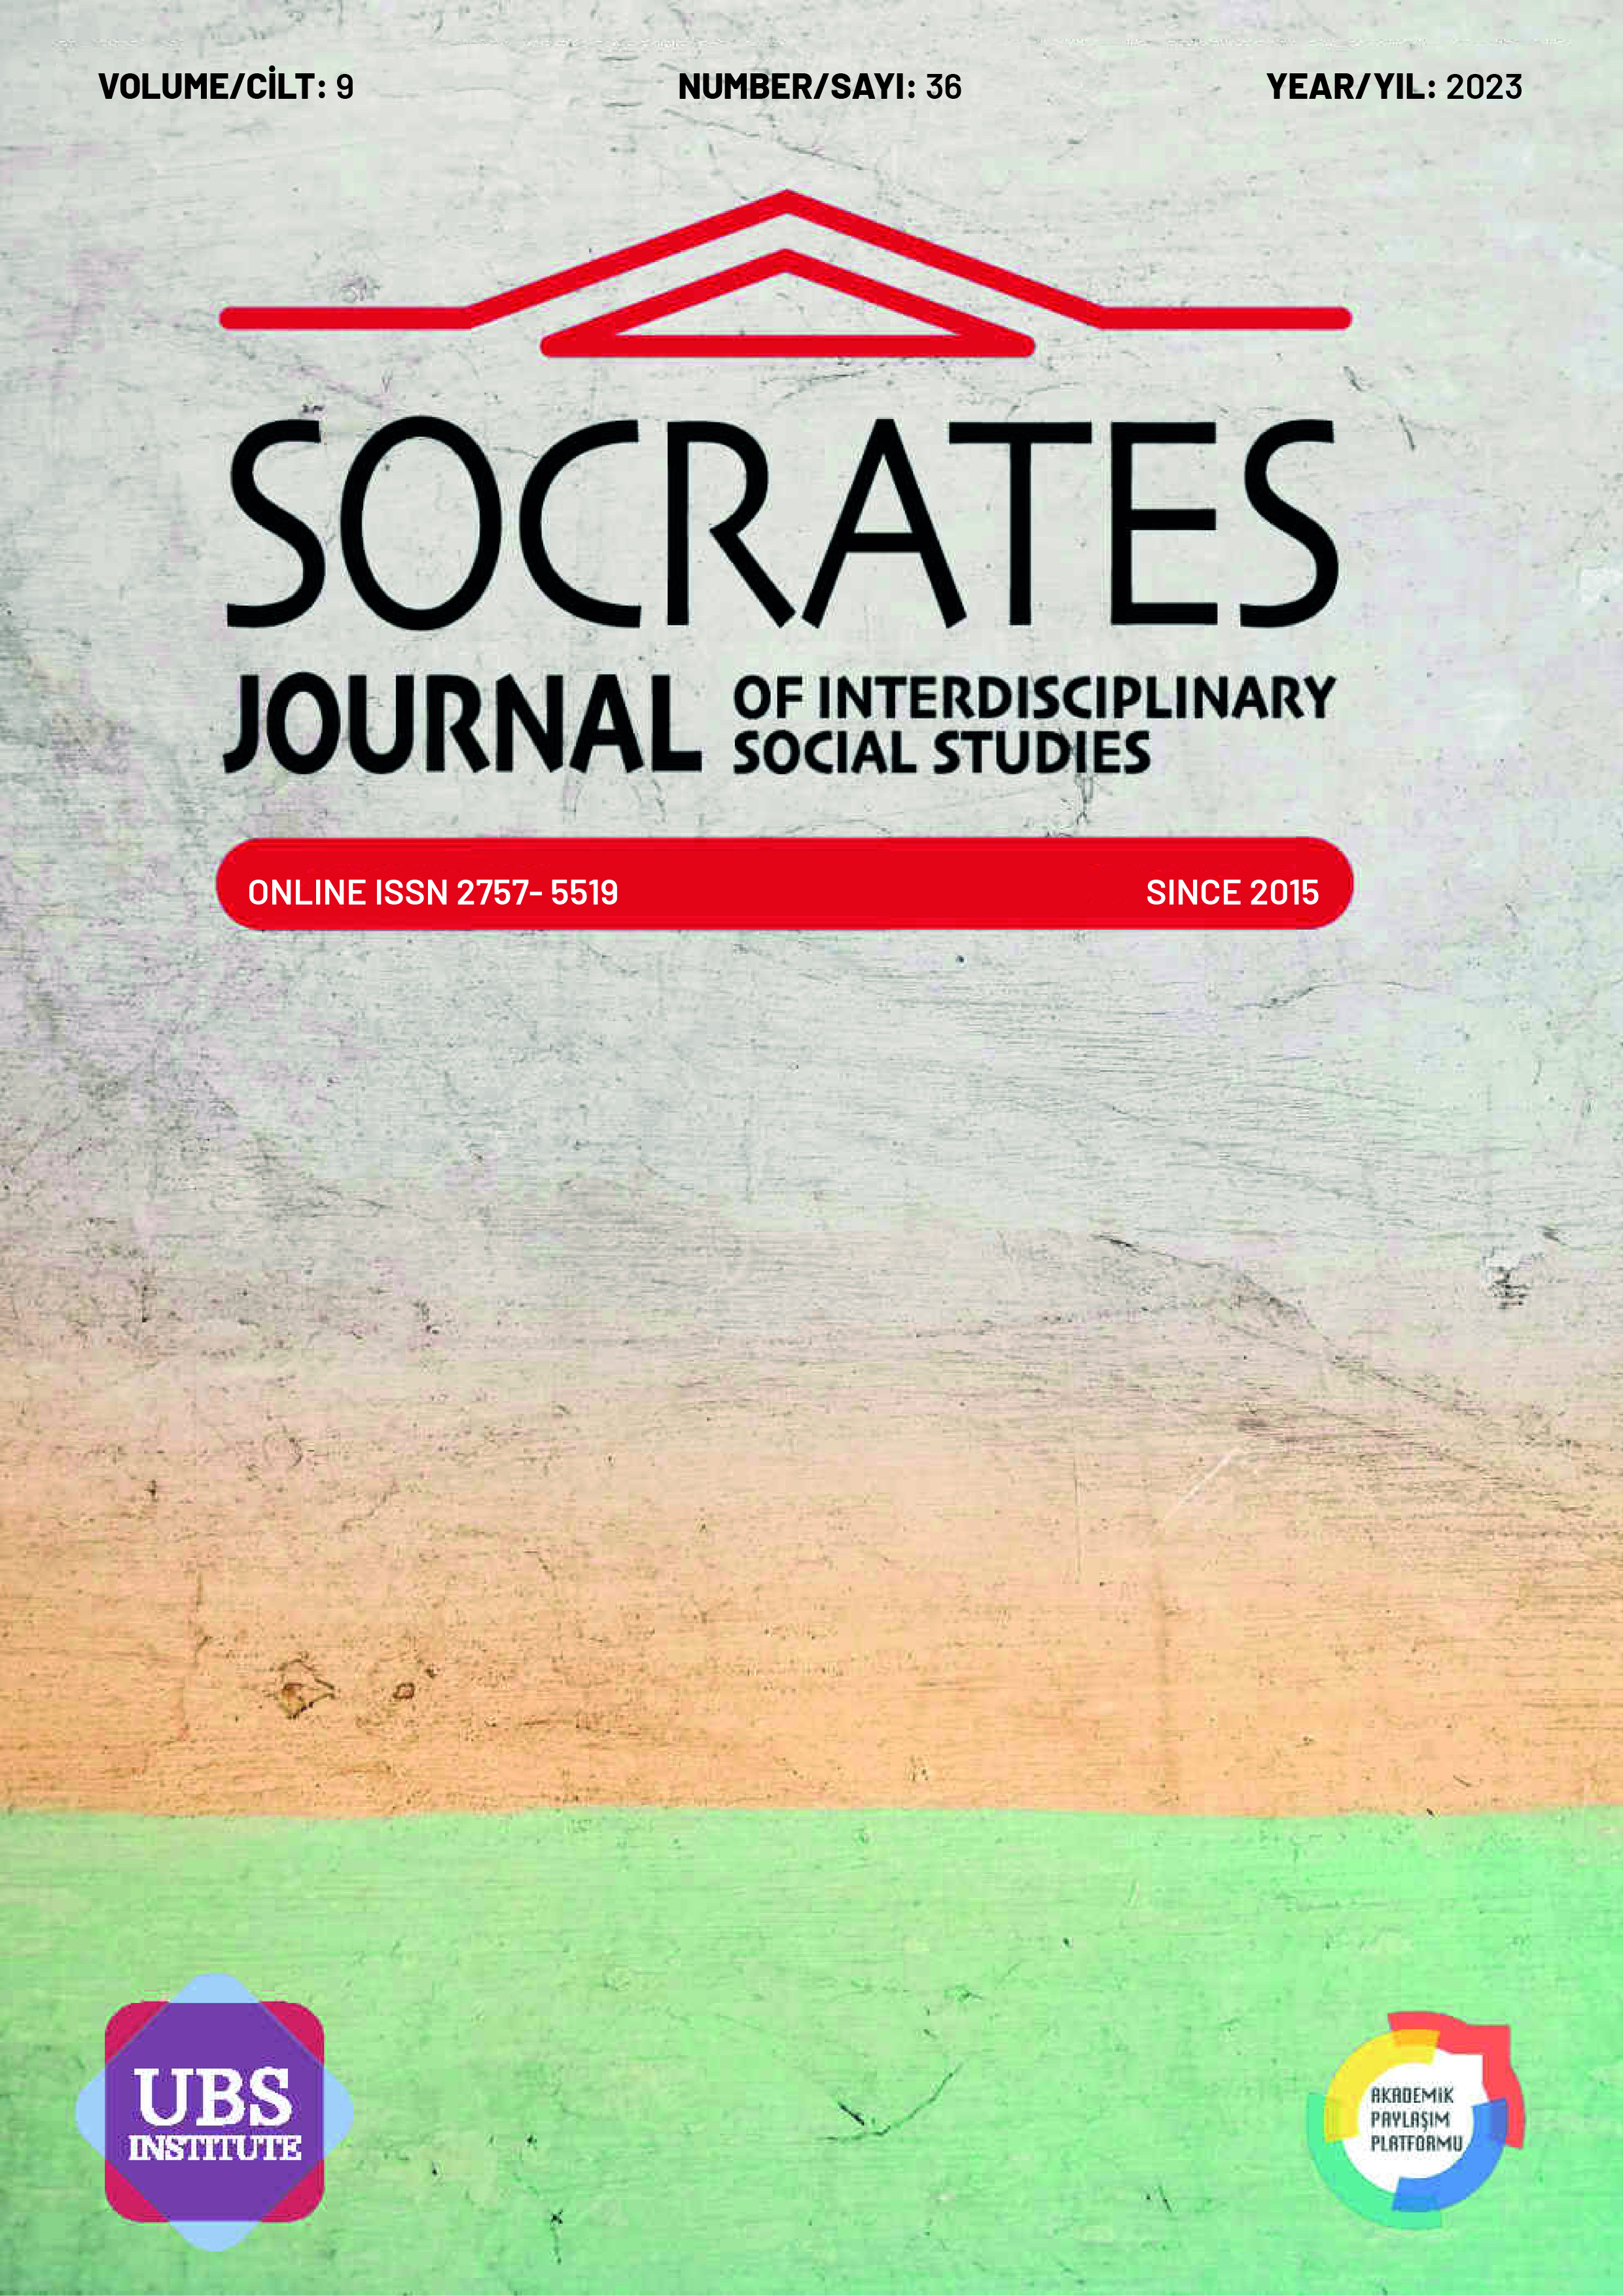 					View Vol. 9 No. 36 (2023): SOCRATES JOURNAL OF INTERDISCIPLINARY SOCIAL STUDIES
				